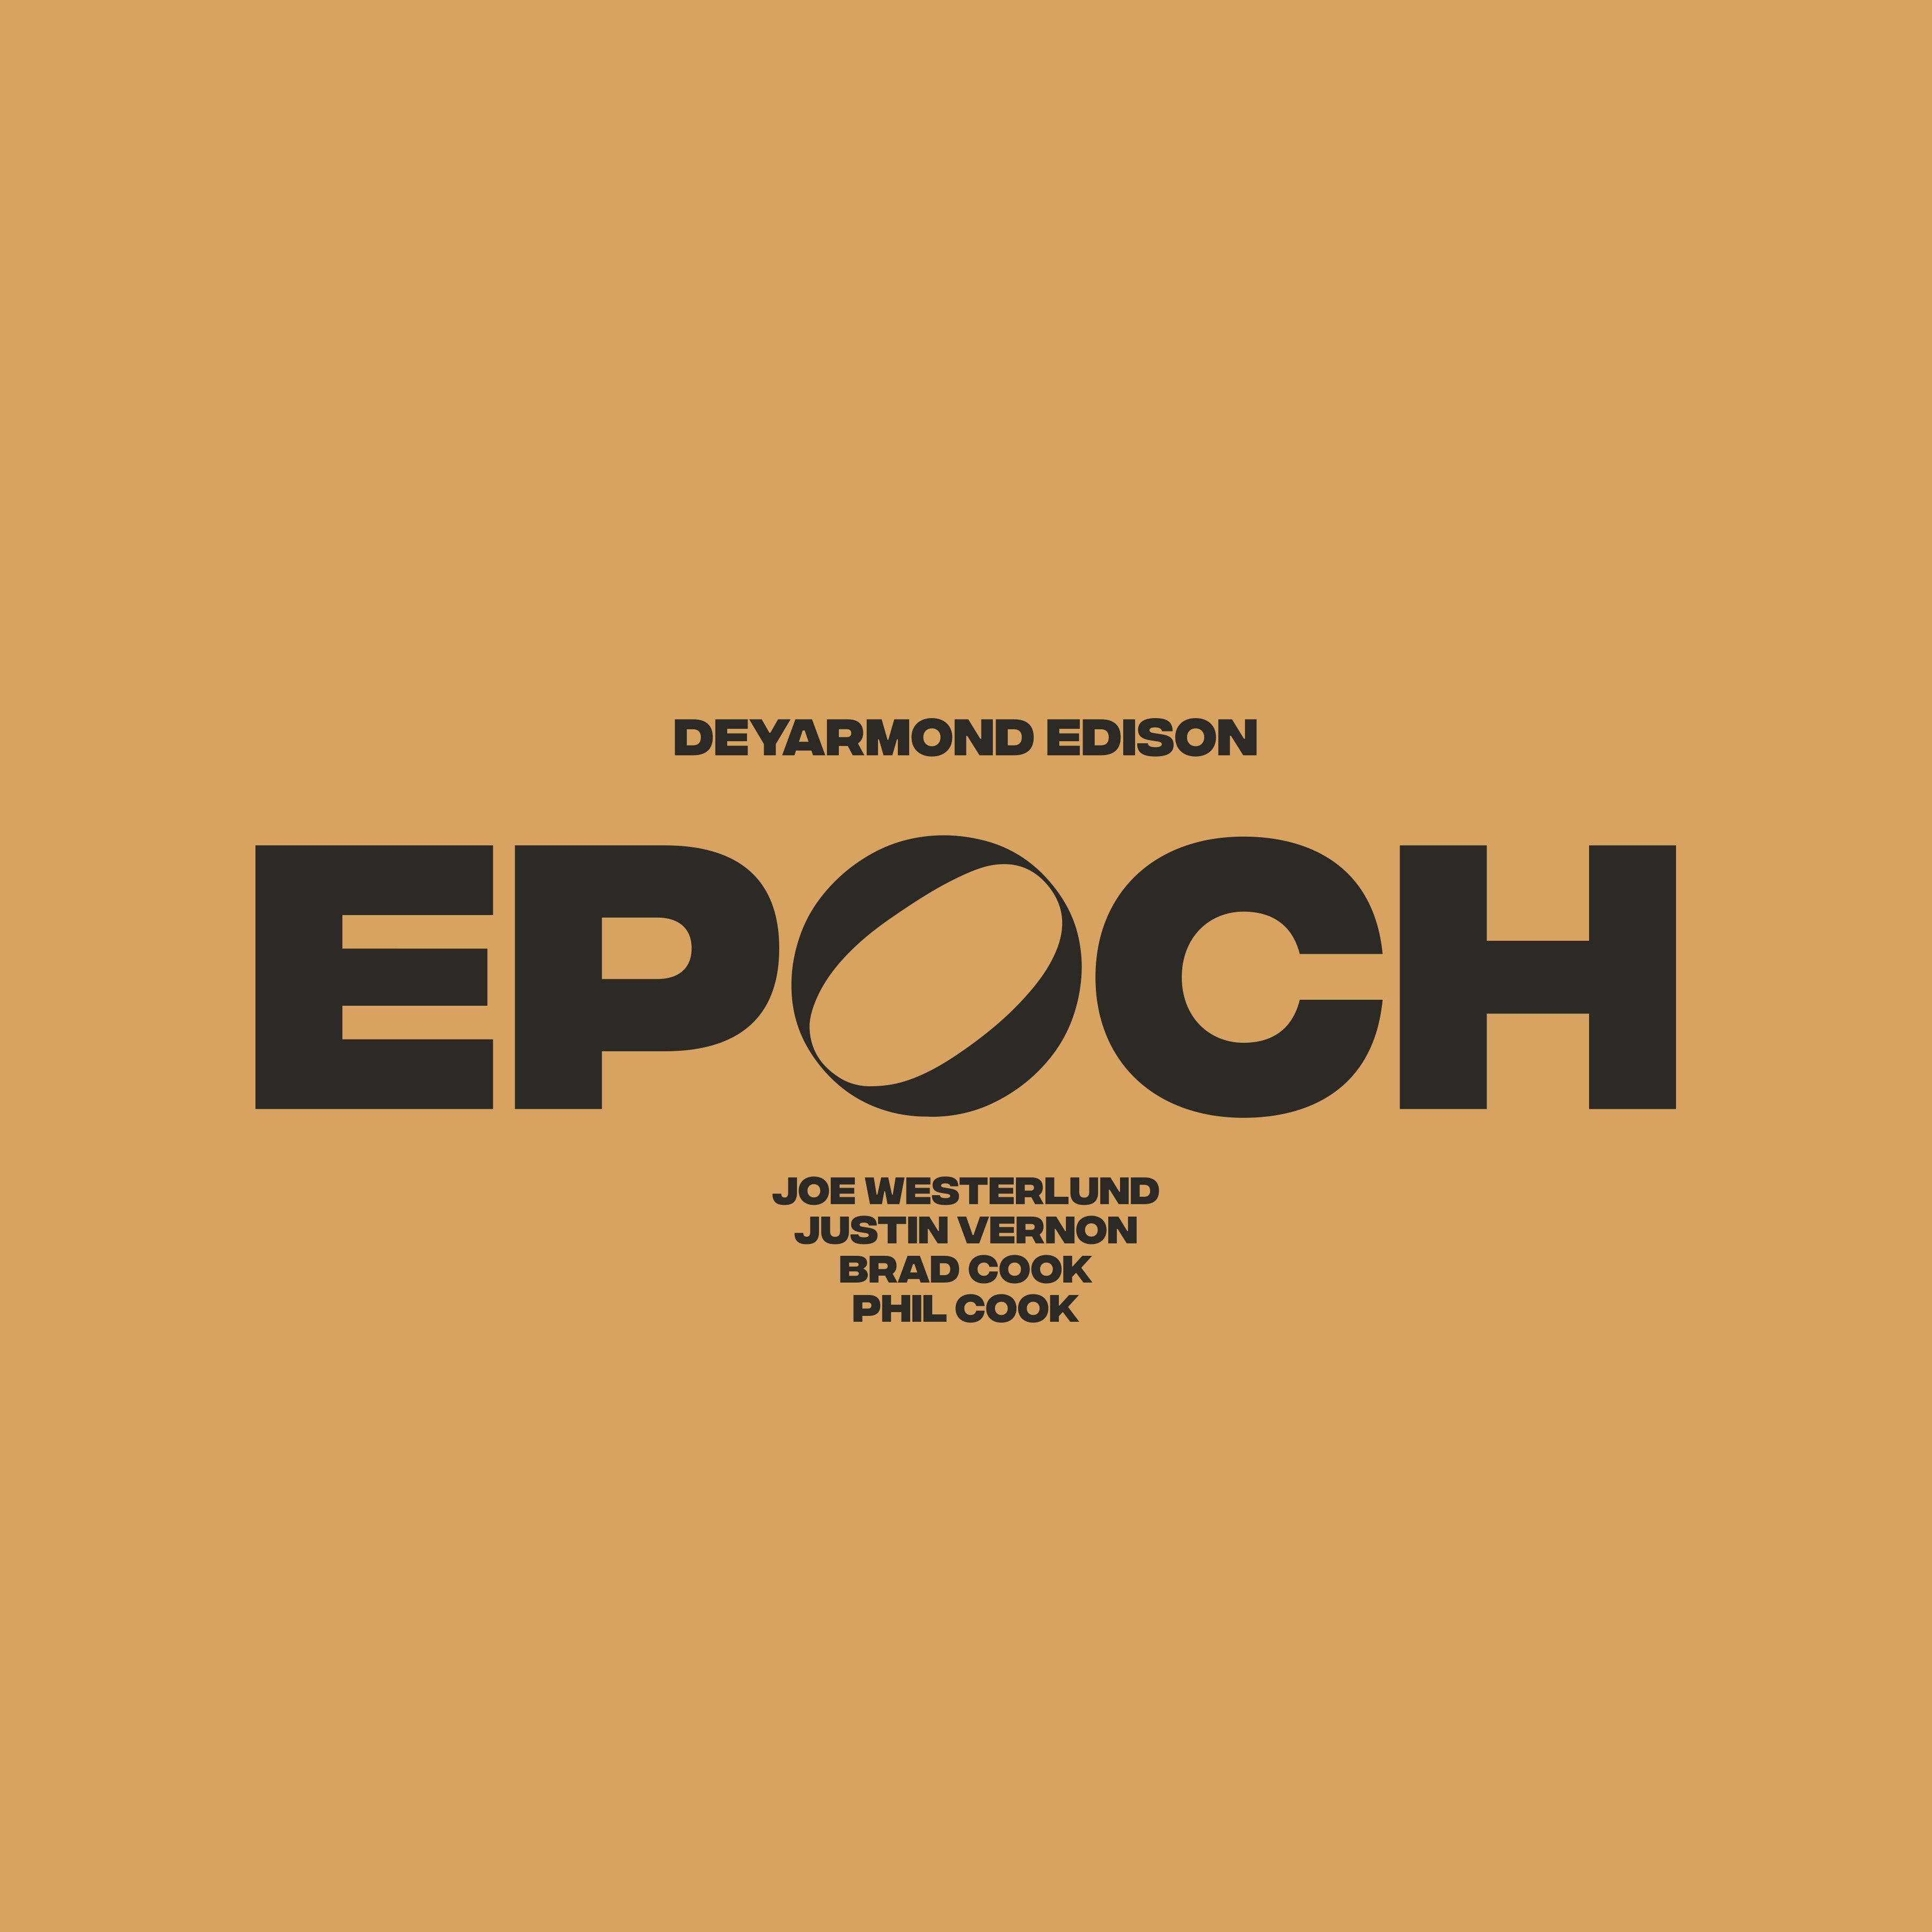 Epoch - DeYarmond Edison [Box Set]